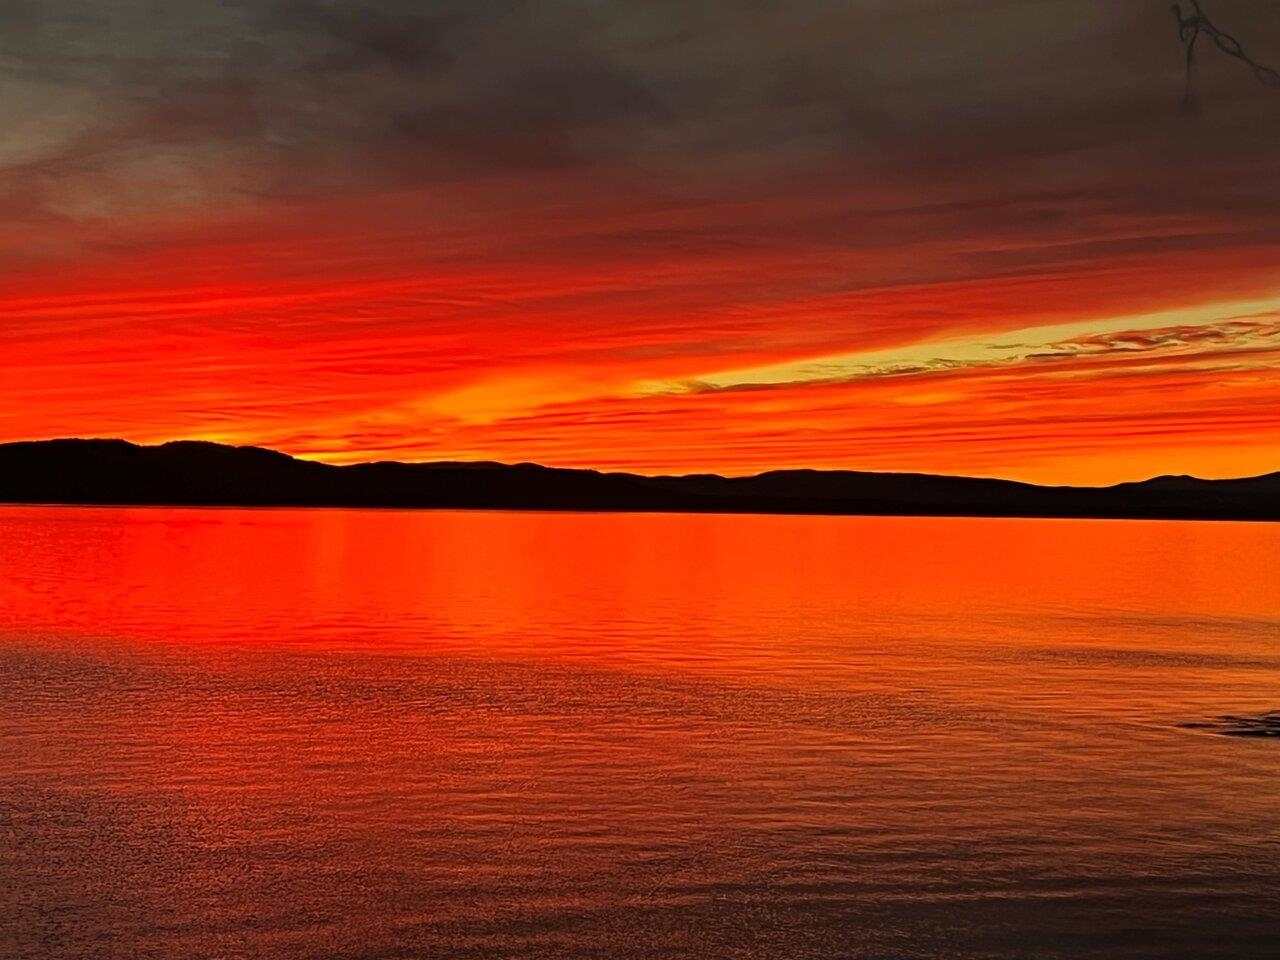 Enjoy sunsets over the lake